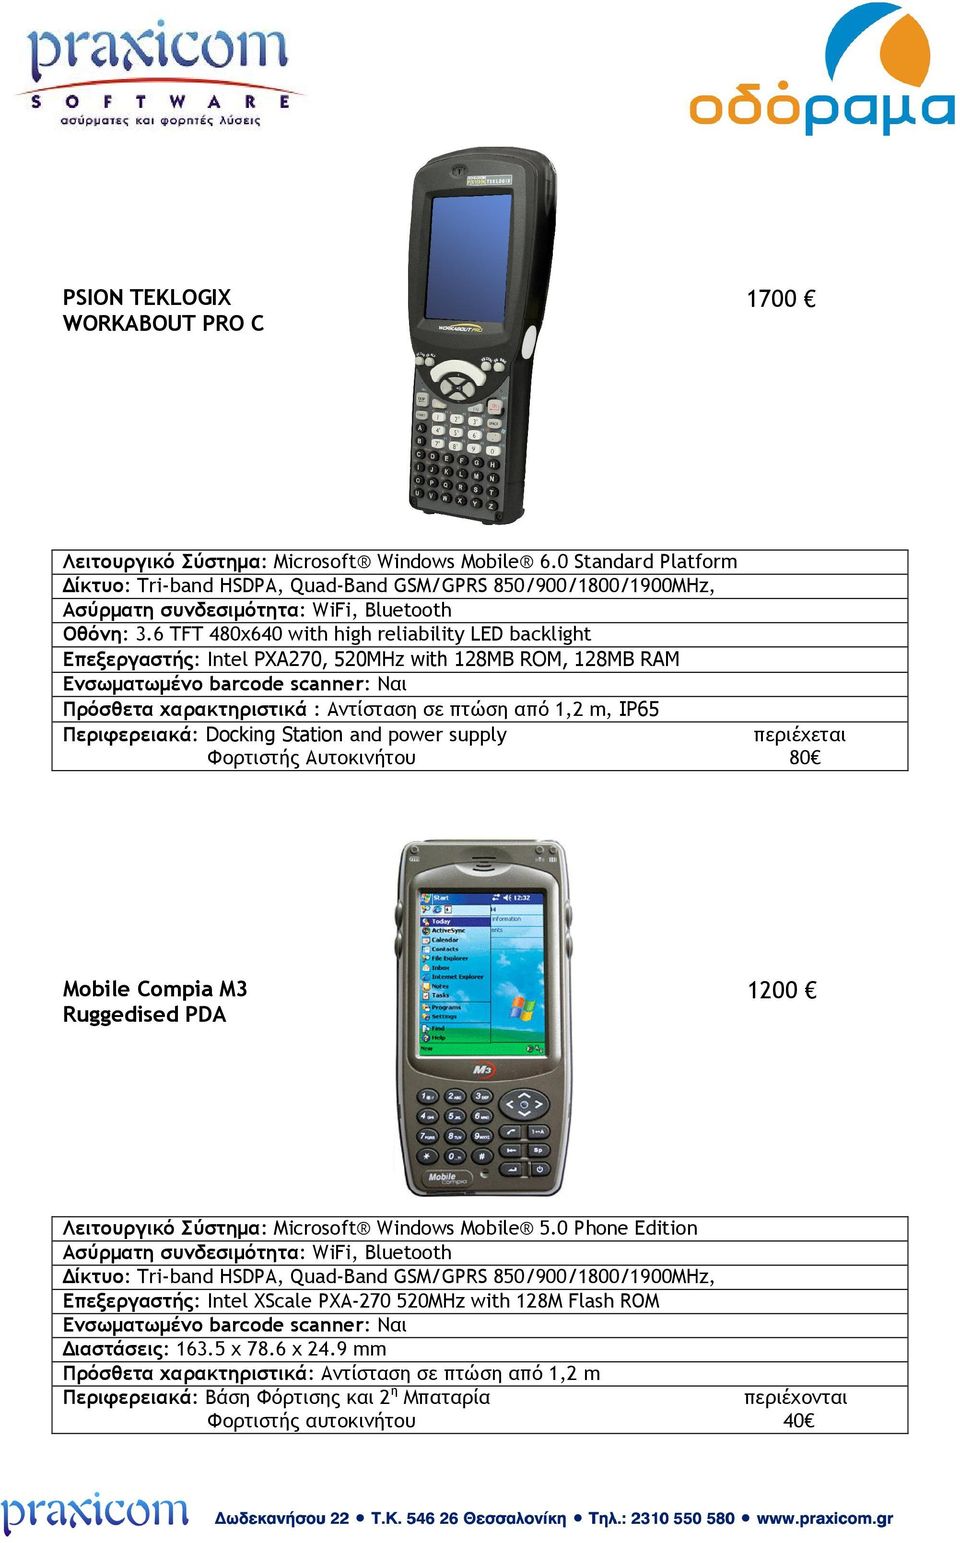 Docking Station and power supply Φορτιστής Αυτοκινήτου 80 Mobile Compia M3 Ruggedised PDA Λειτουργικό Σύστημα: Microsoft Windows Mobile 5.